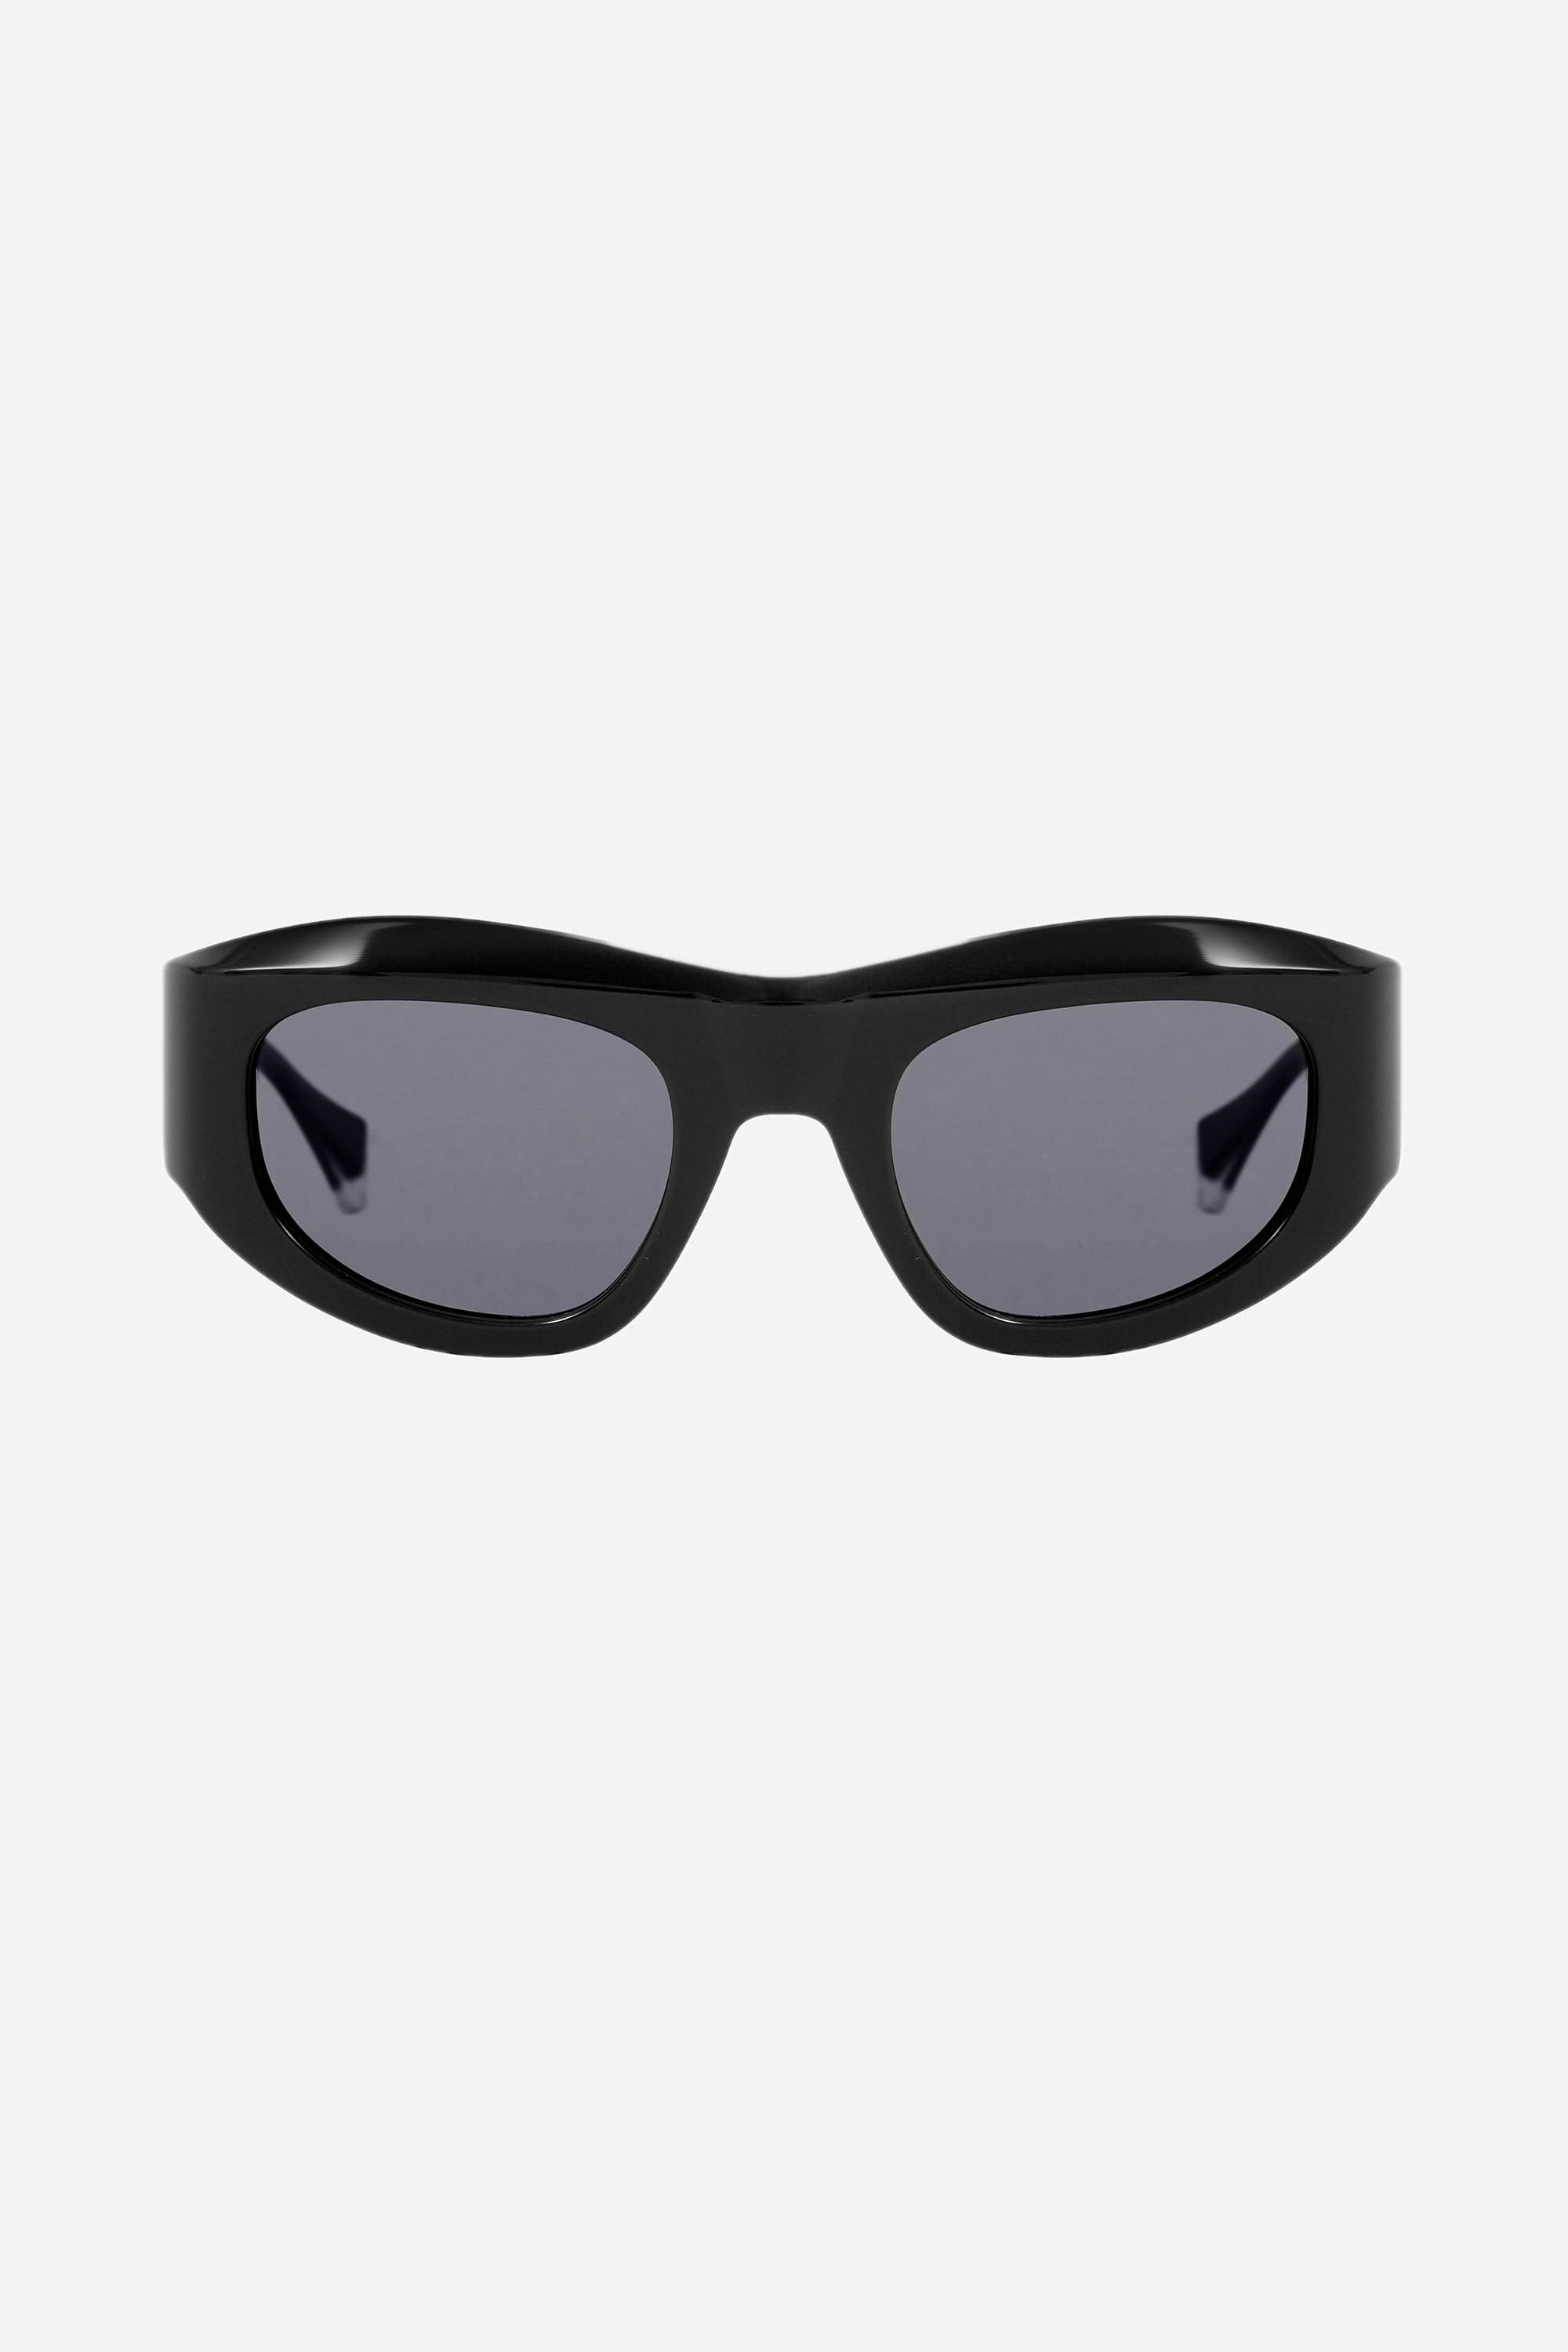 Gigi Studios wrap around black sunglasses - Eyewear Club